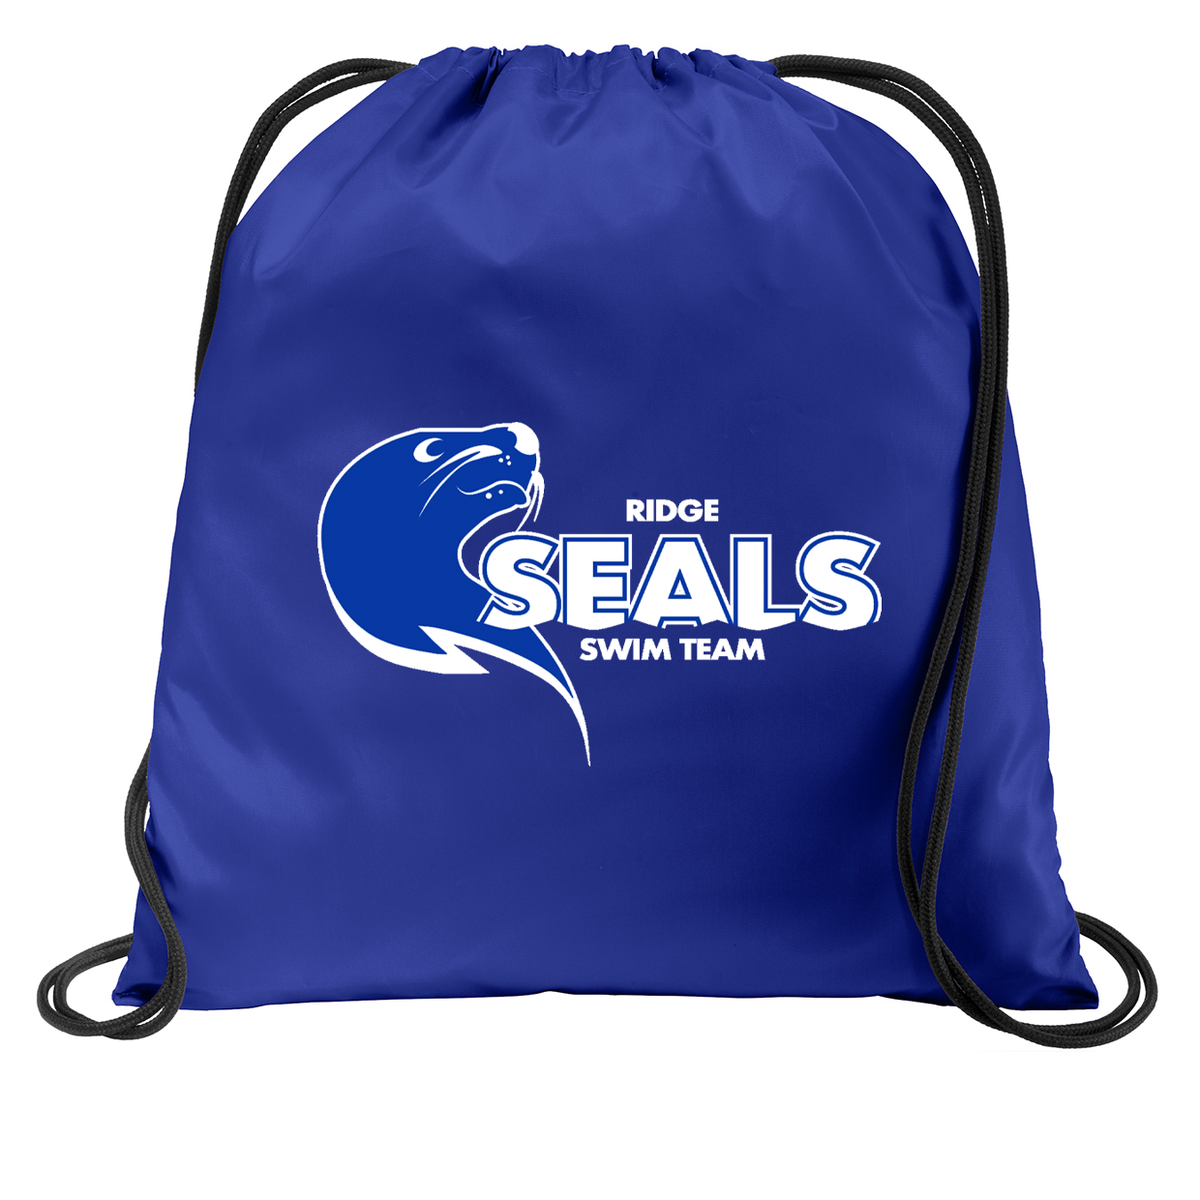 Ridge Seals Swim Team Cinch Pack